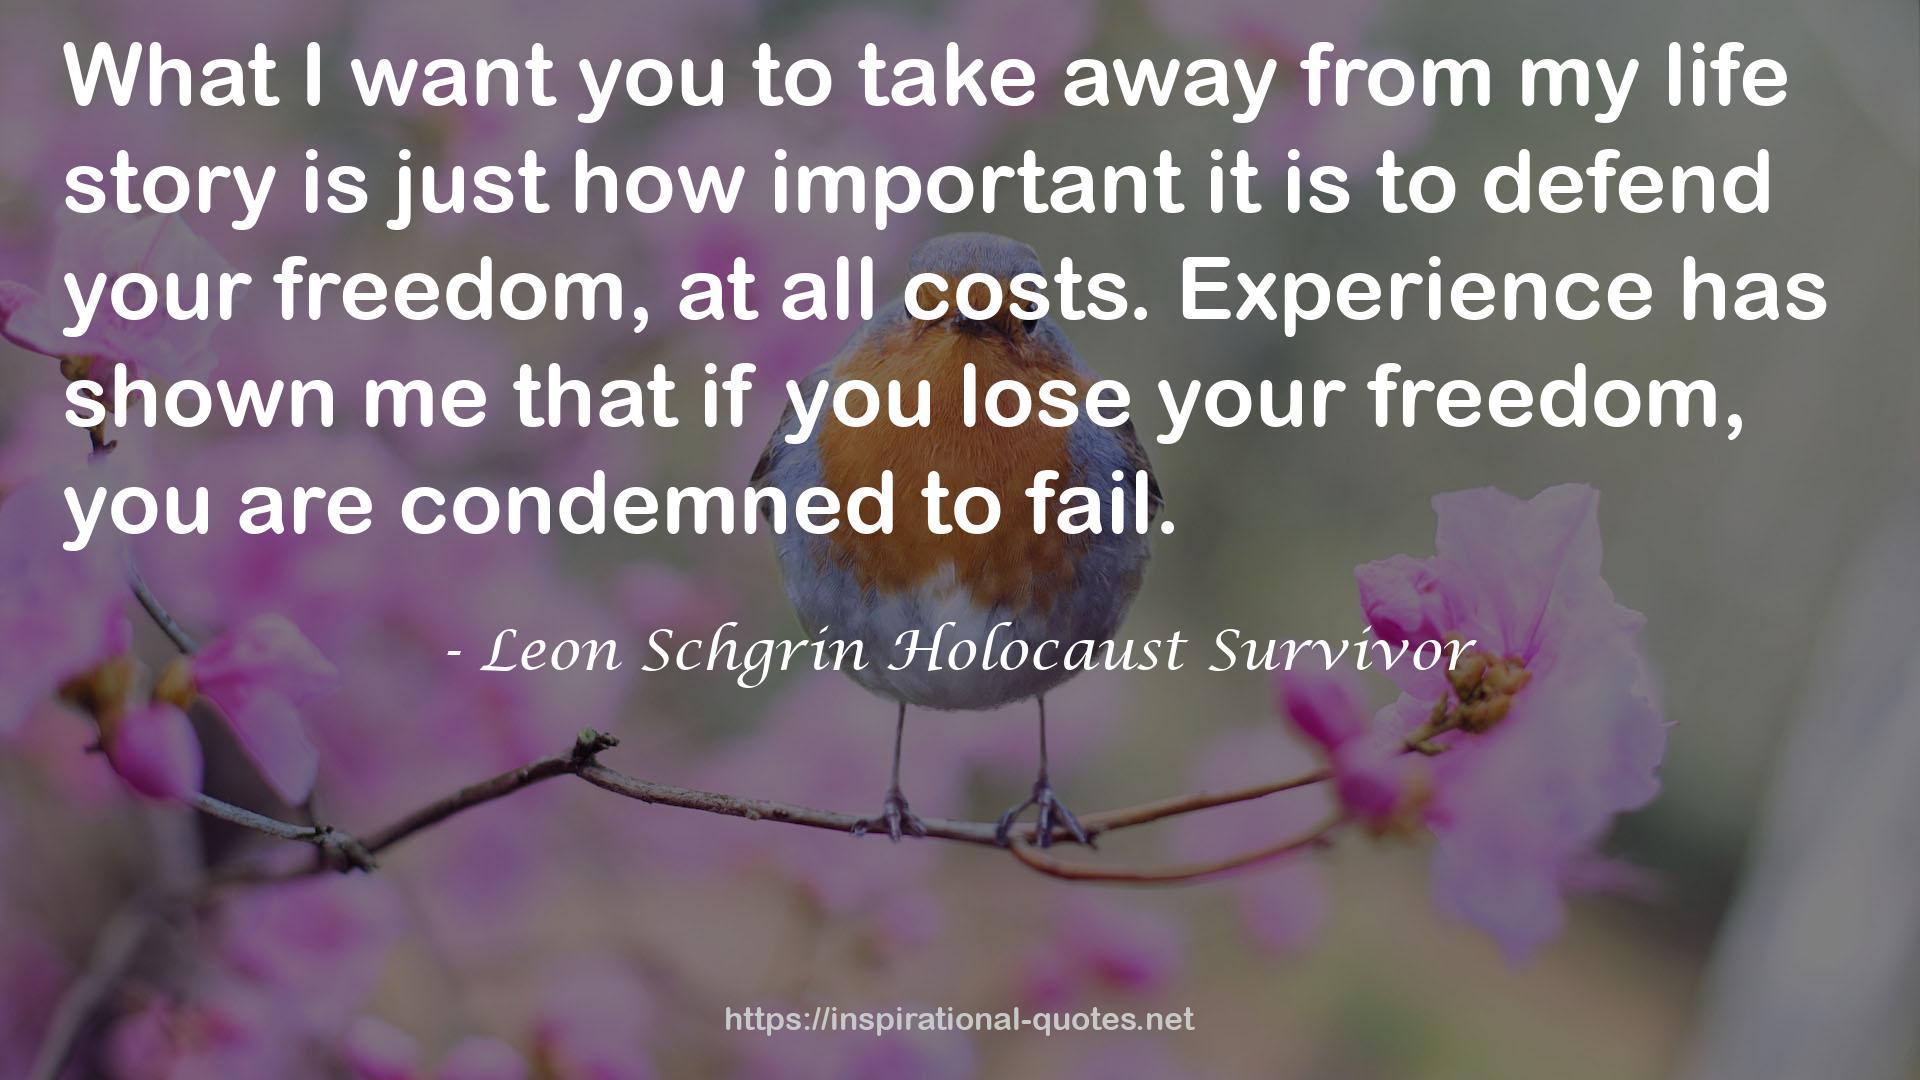 Leon Schgrin Holocaust Survivor QUOTES